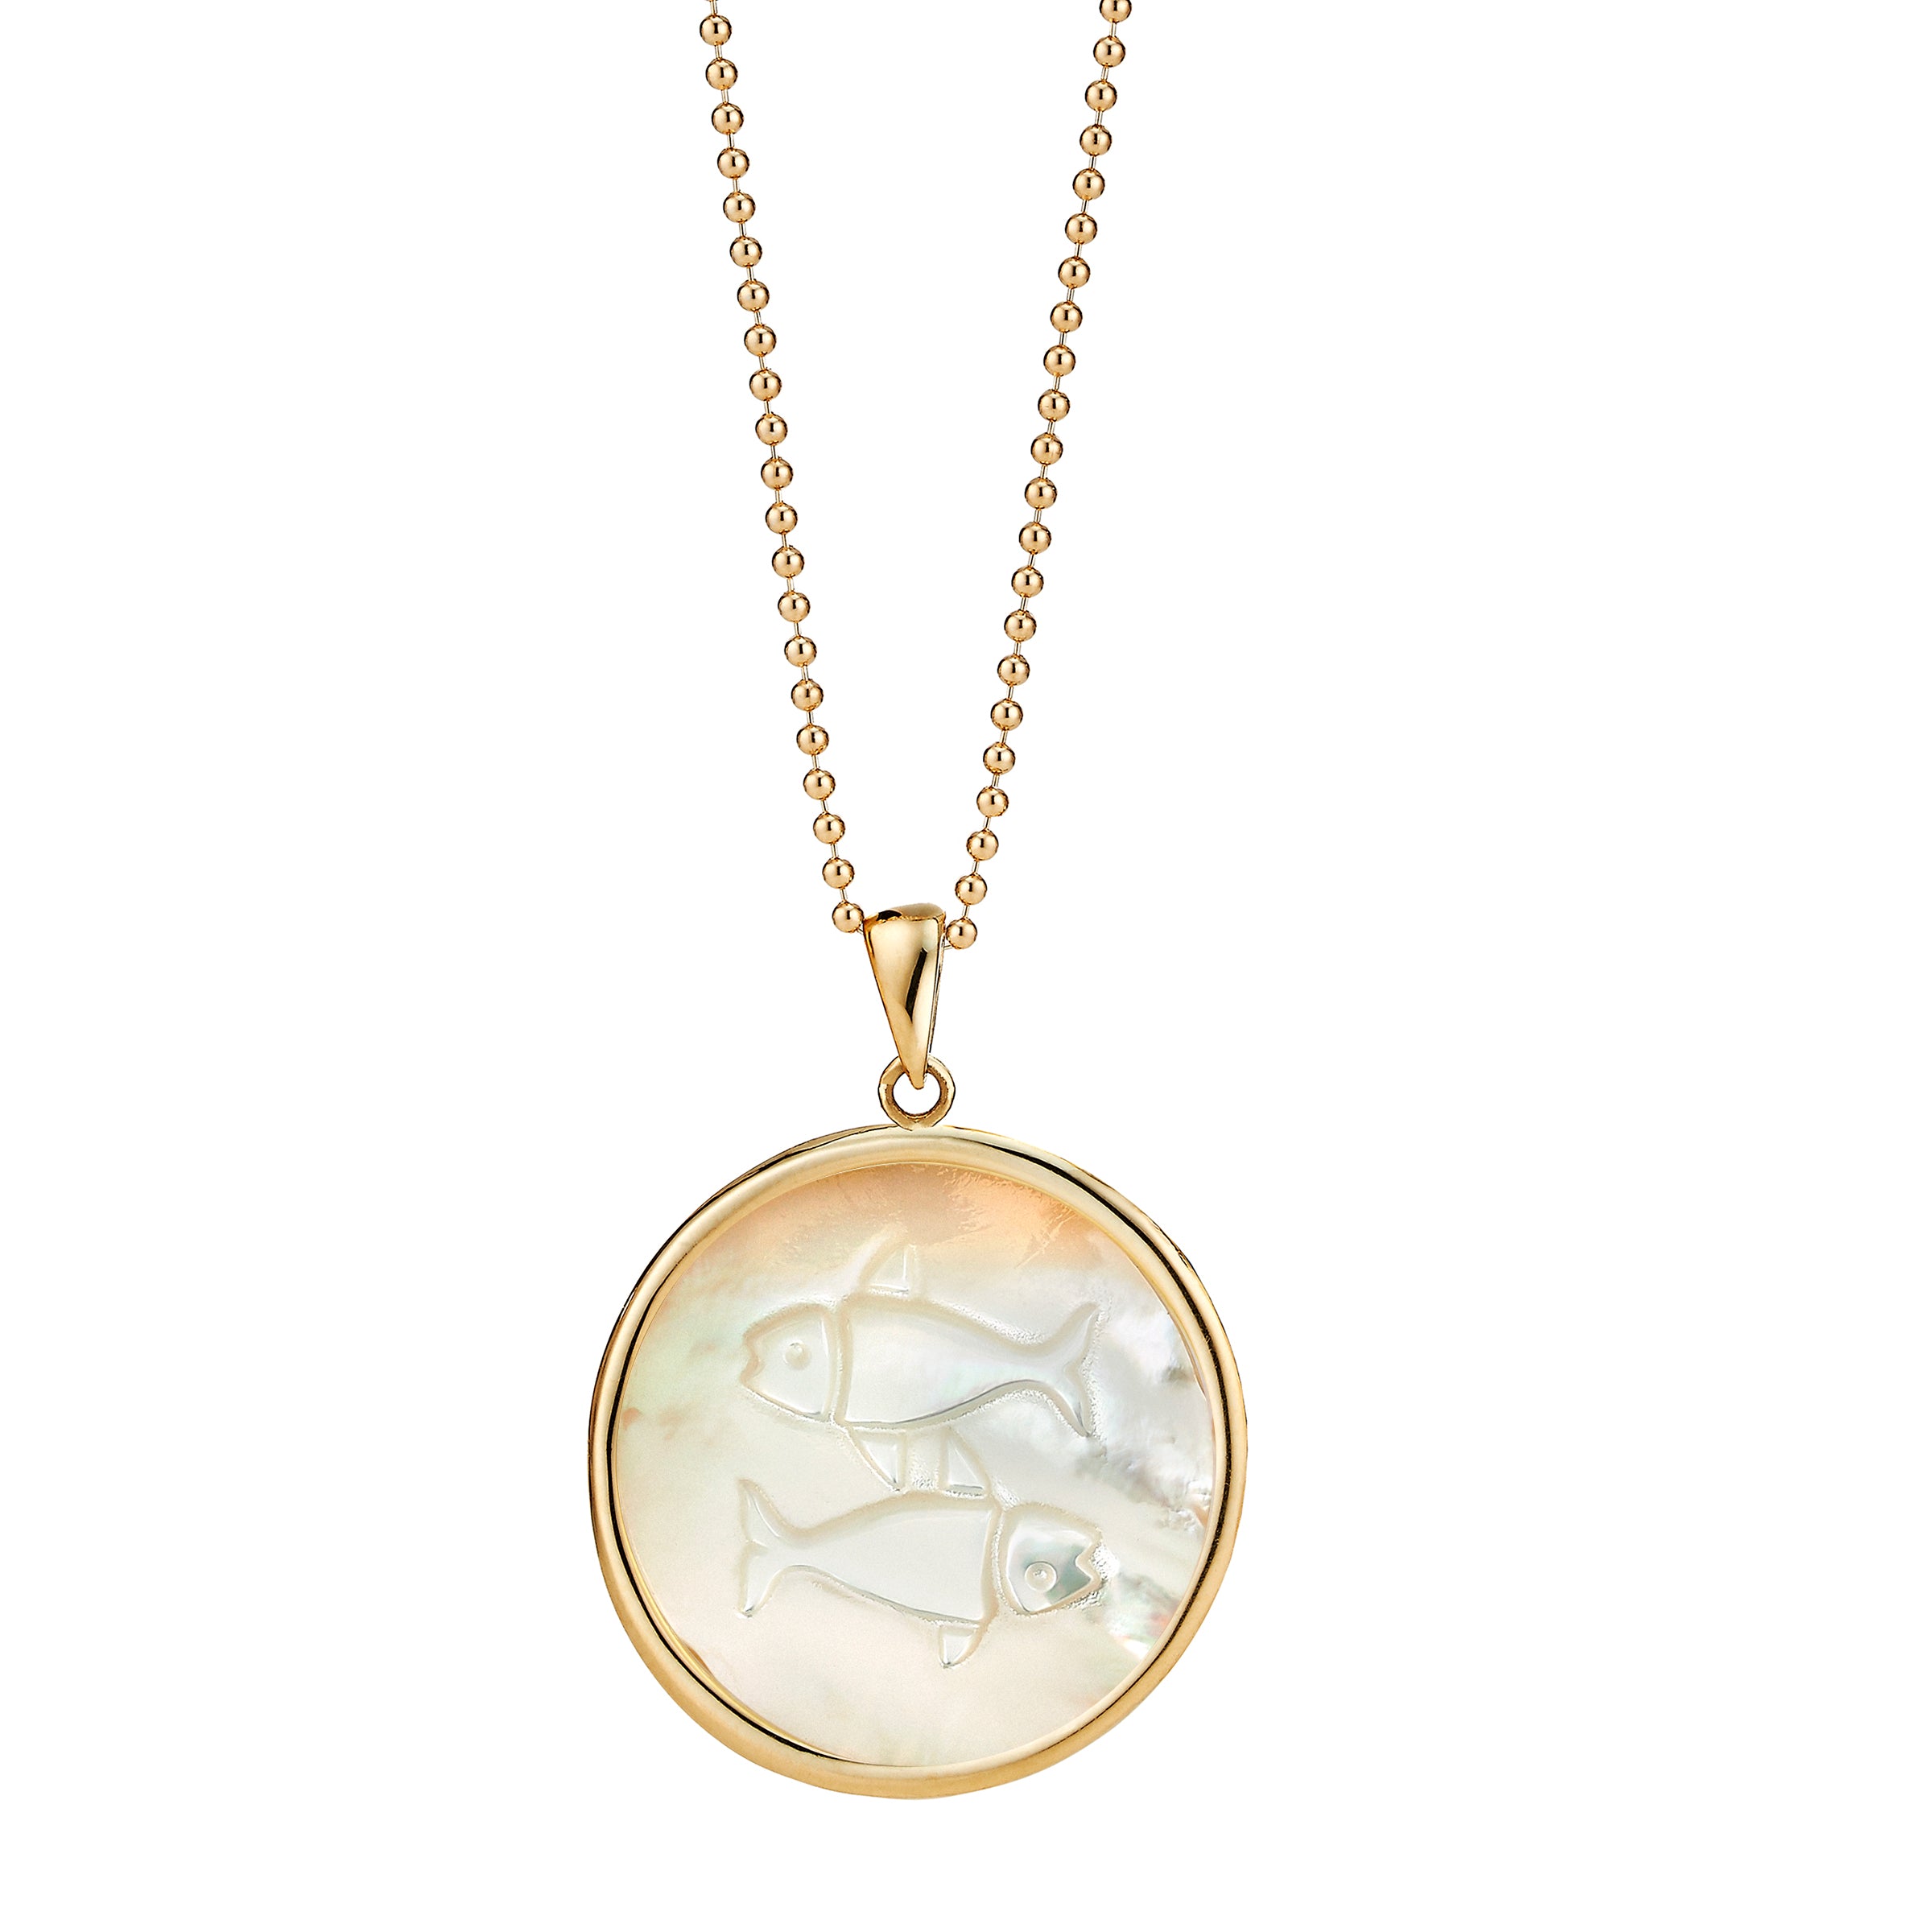 Zodiac sign necklace - Virgo - Gold - 29,00 €